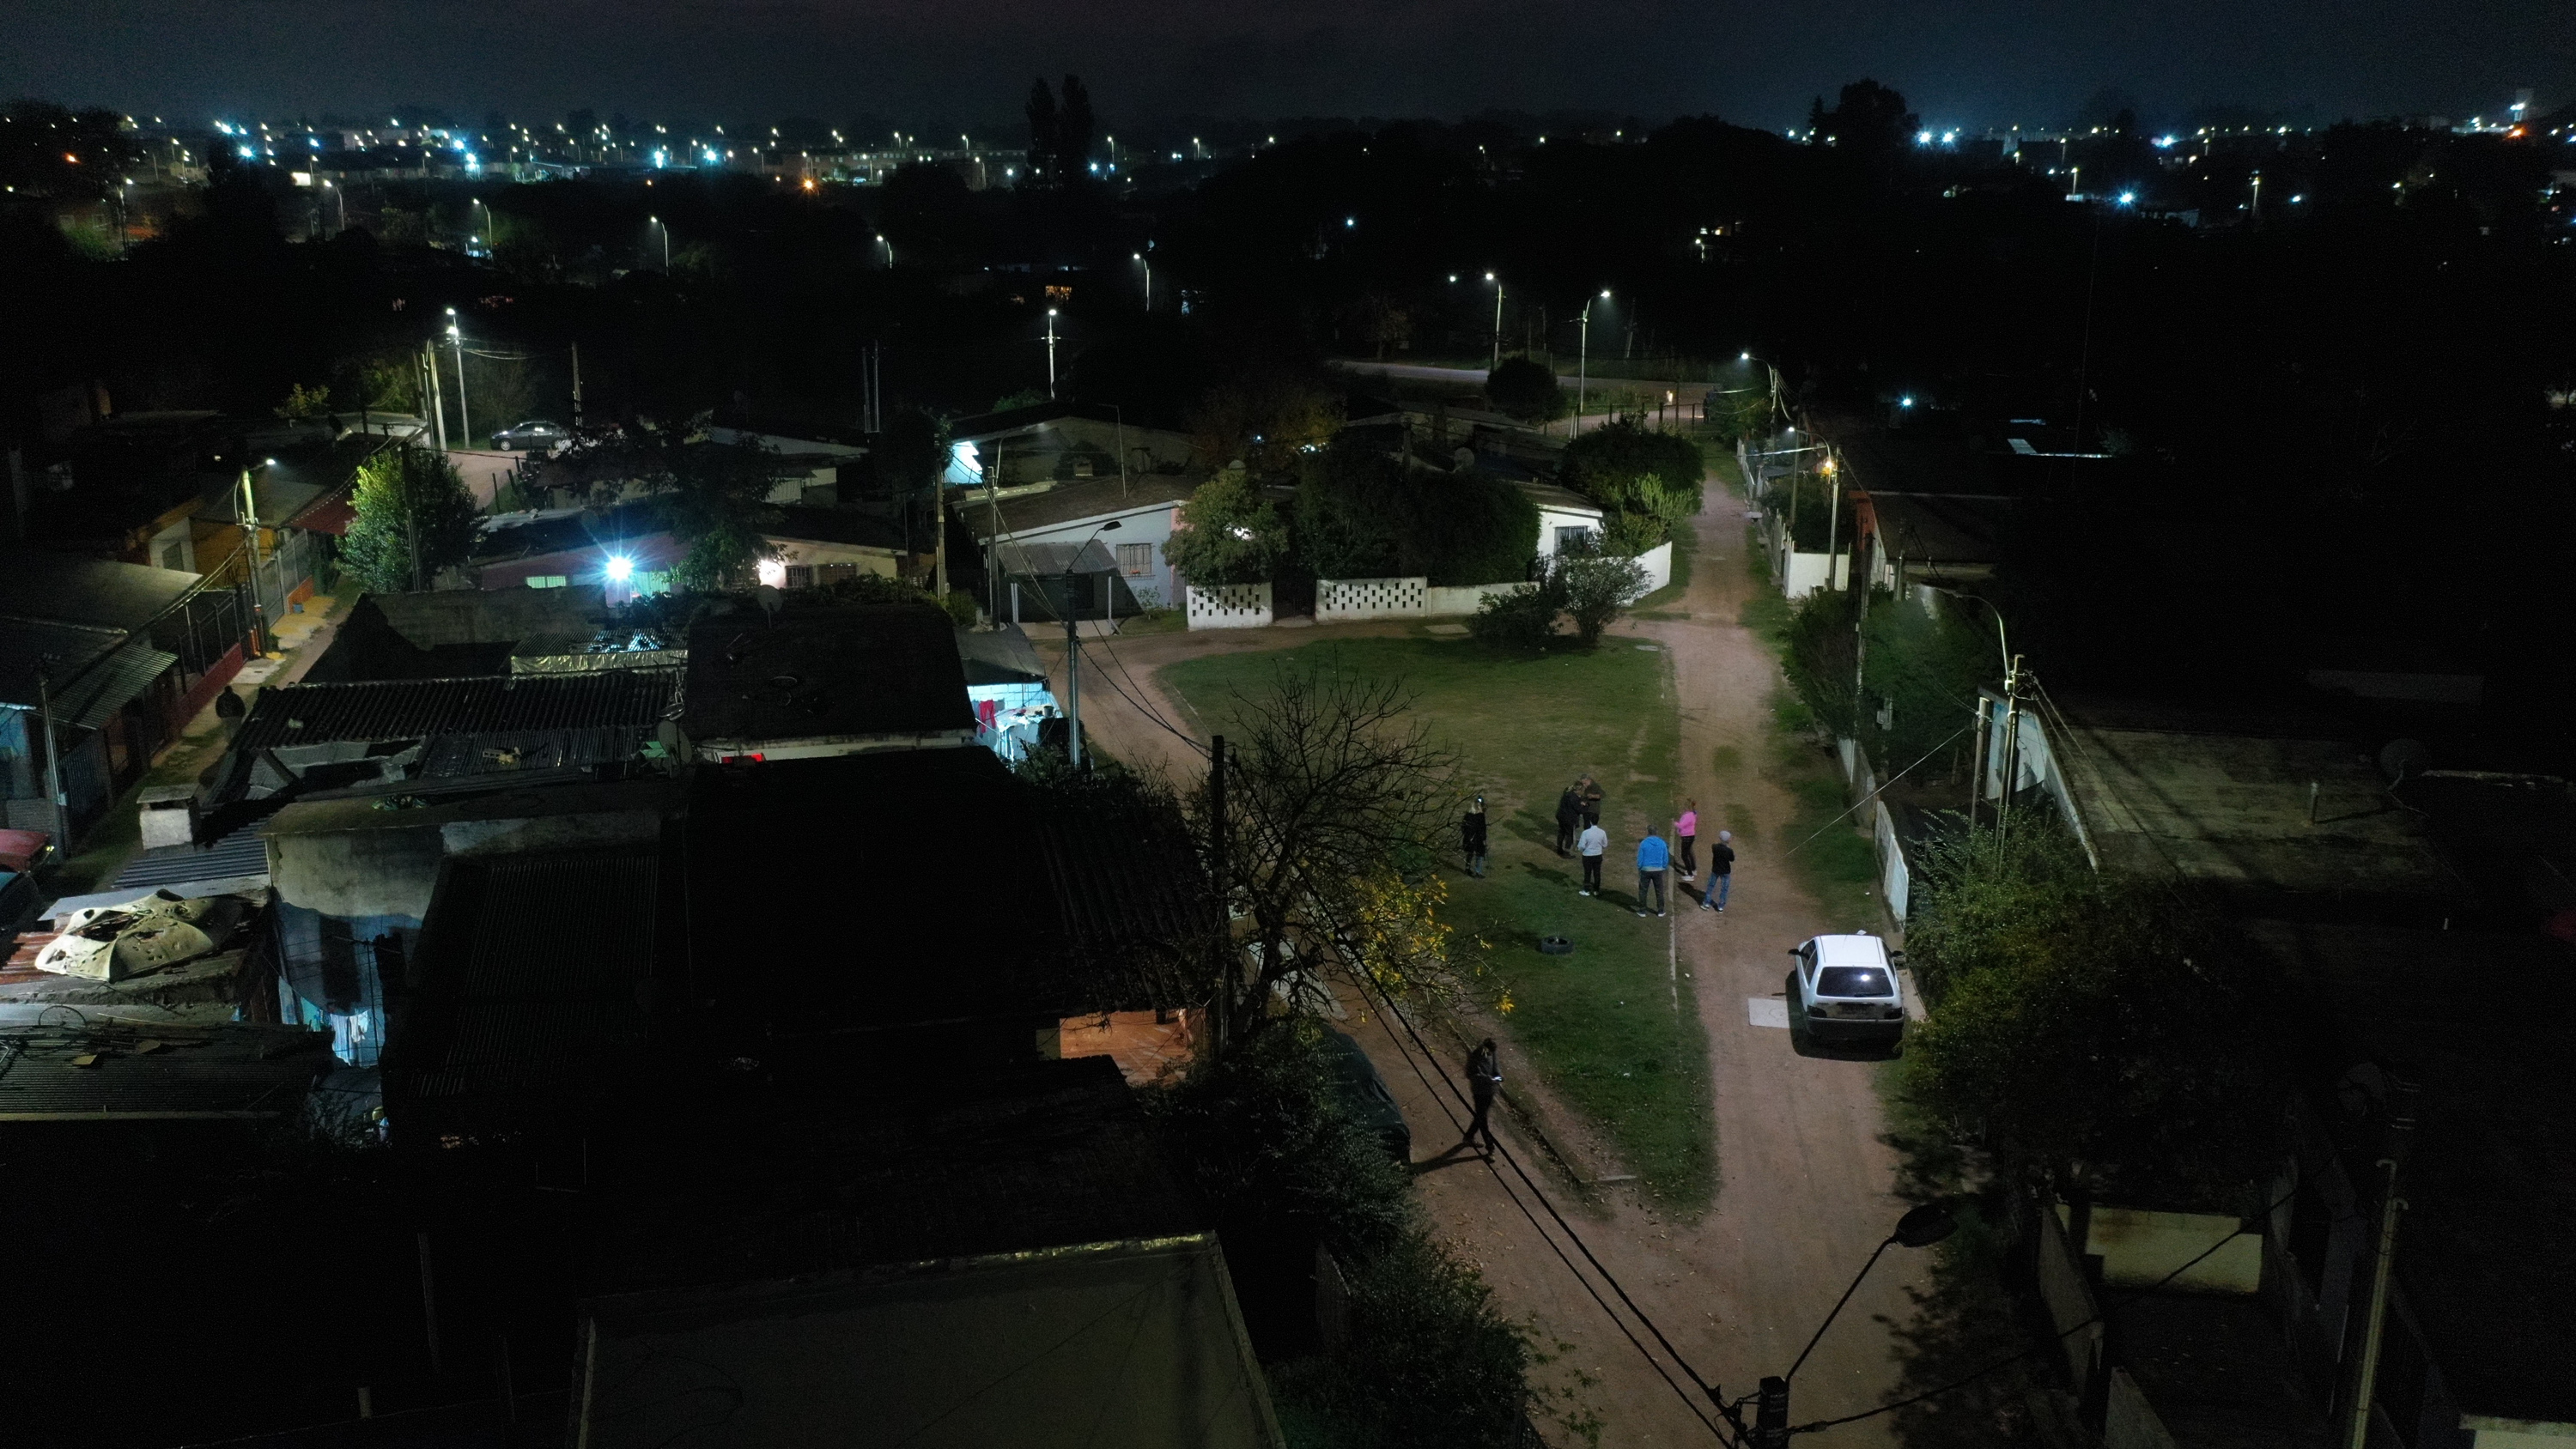 Montevideo se ilumina en el barrio Punta de Rieles